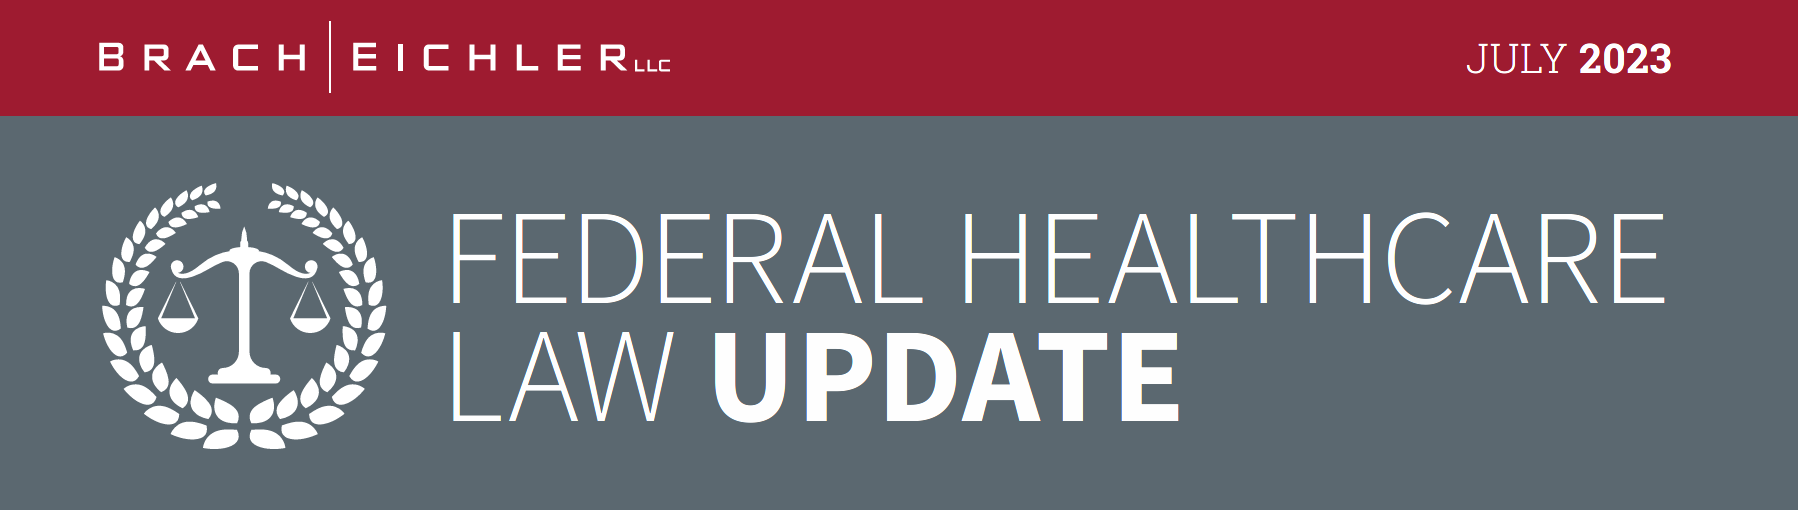 Federal healthcare Law update - July 2023 - Brach Eichler